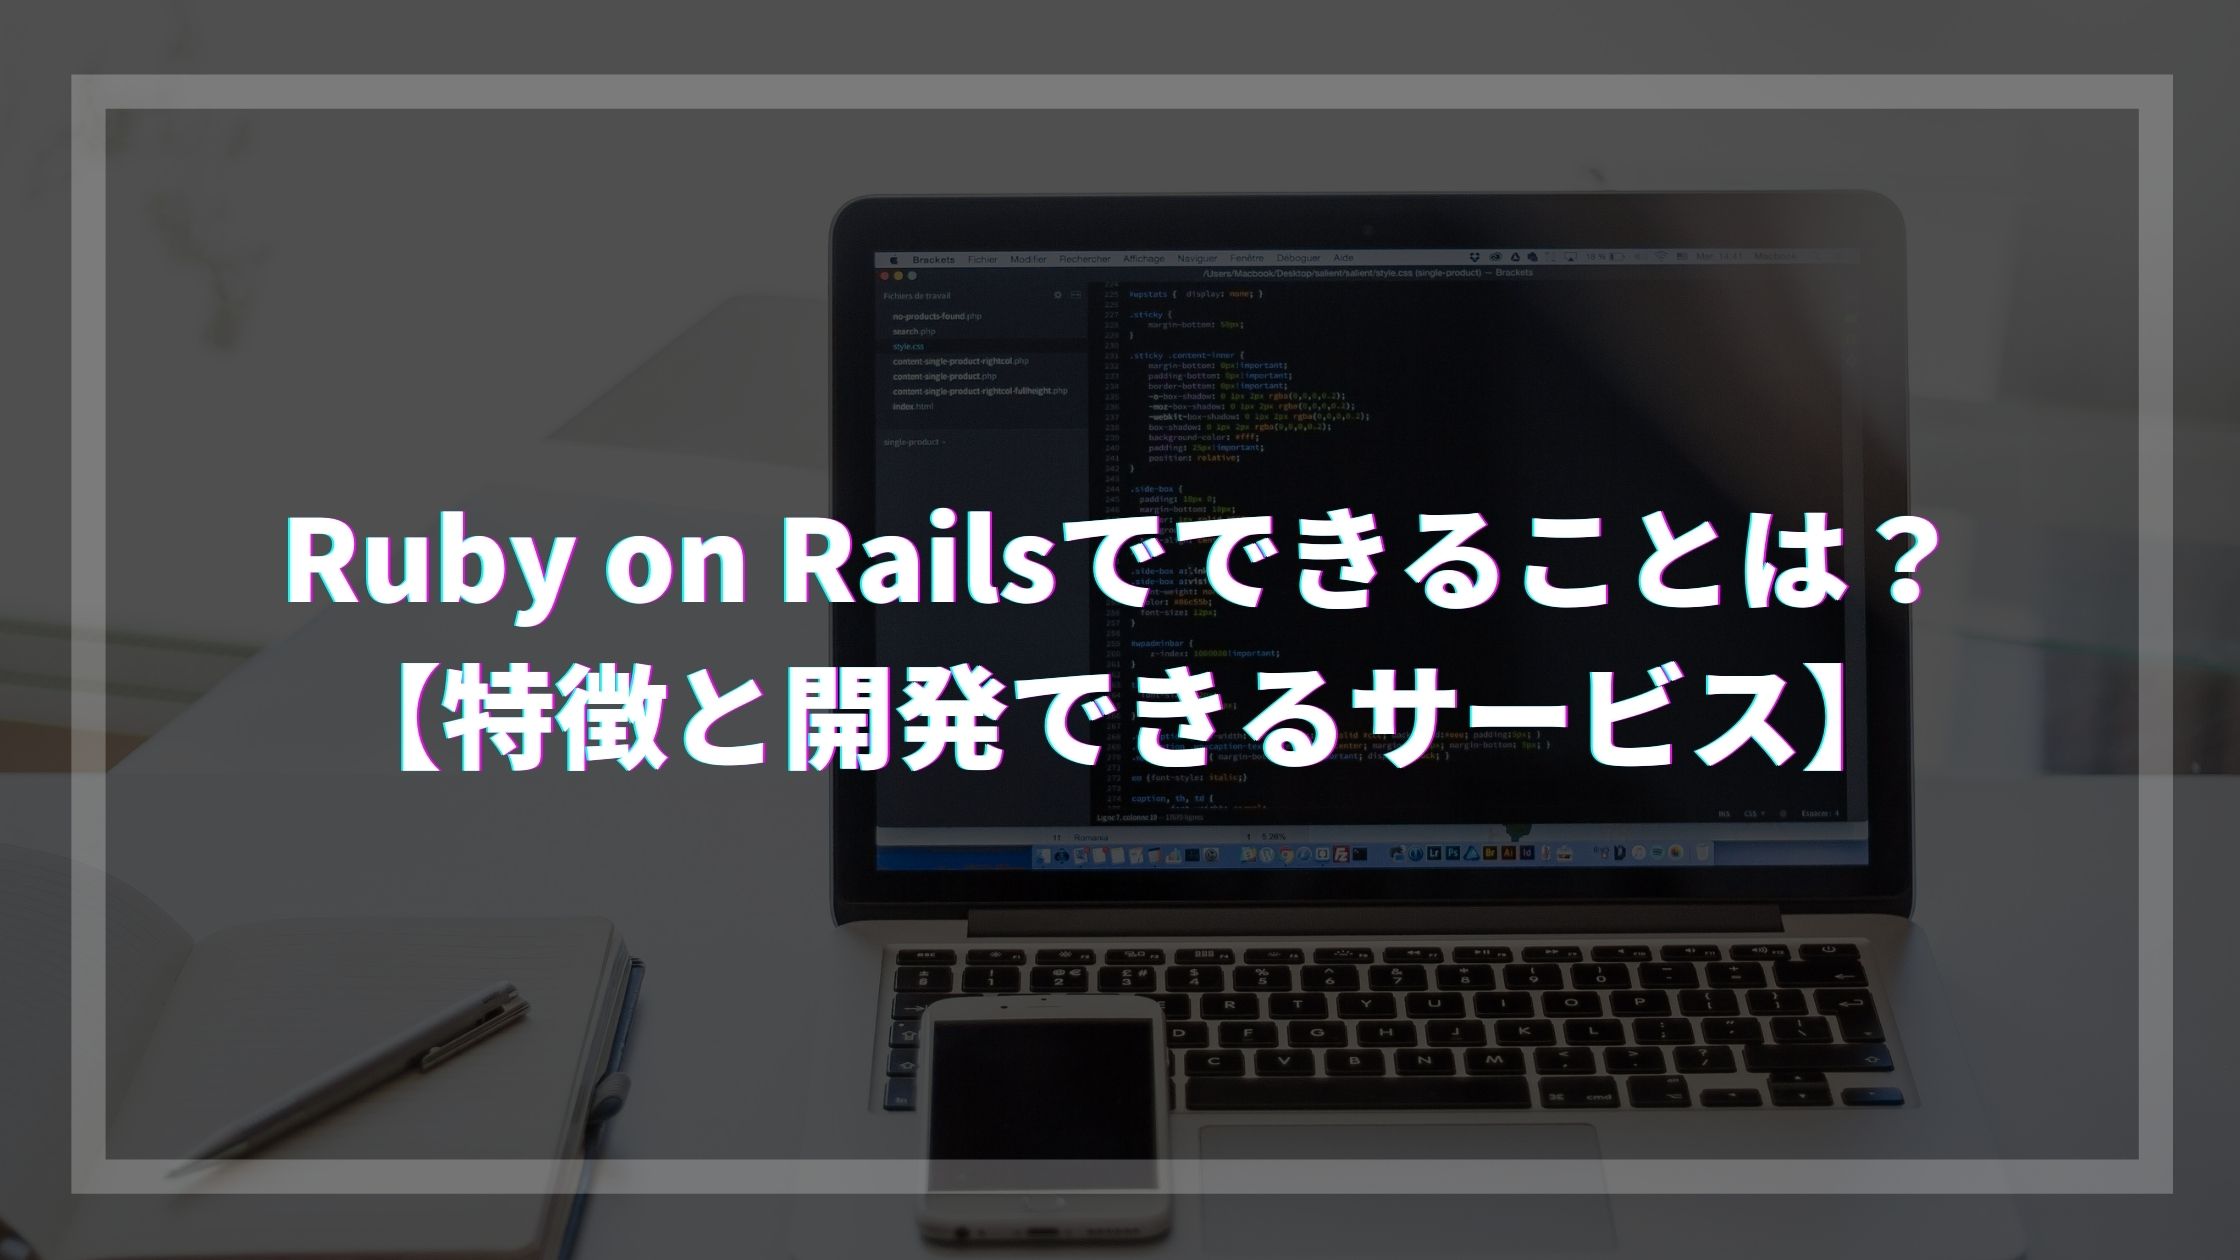 Ruby on Railsでできることは？【特徴と開発できるサービス紹介】